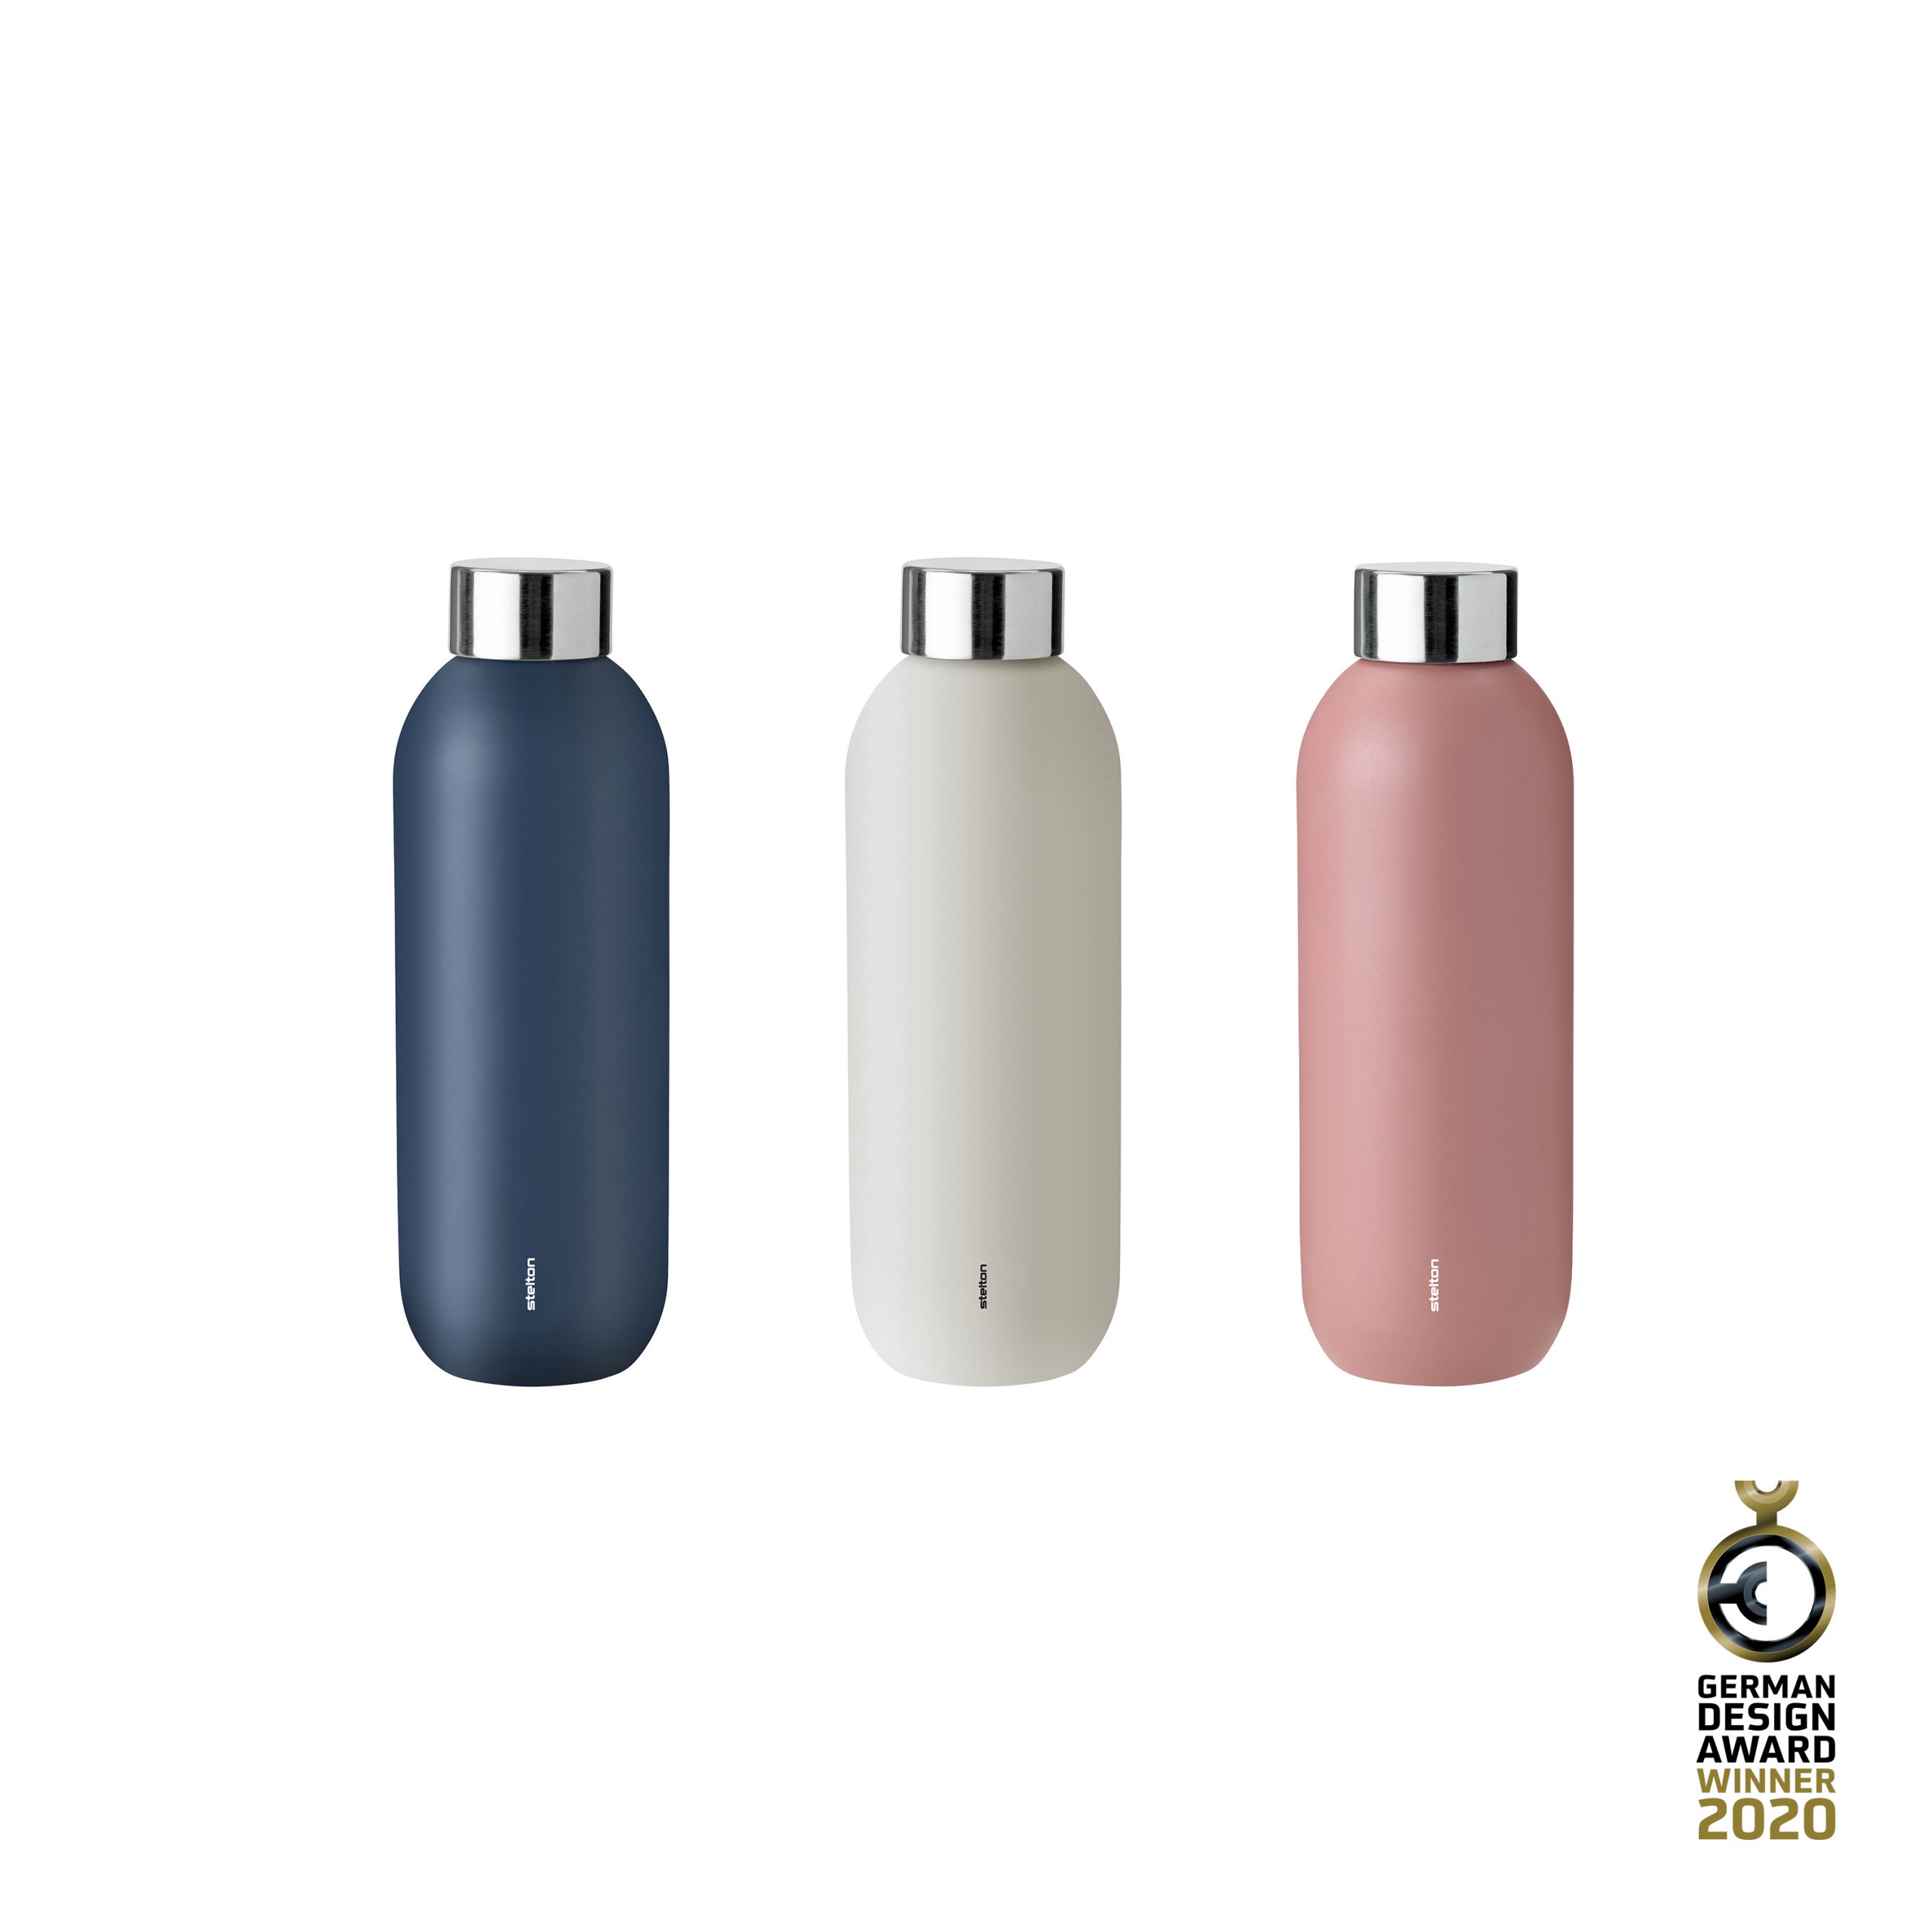 German Design Award for Keep Cool bottle by Debiasi Sandri for Stelton